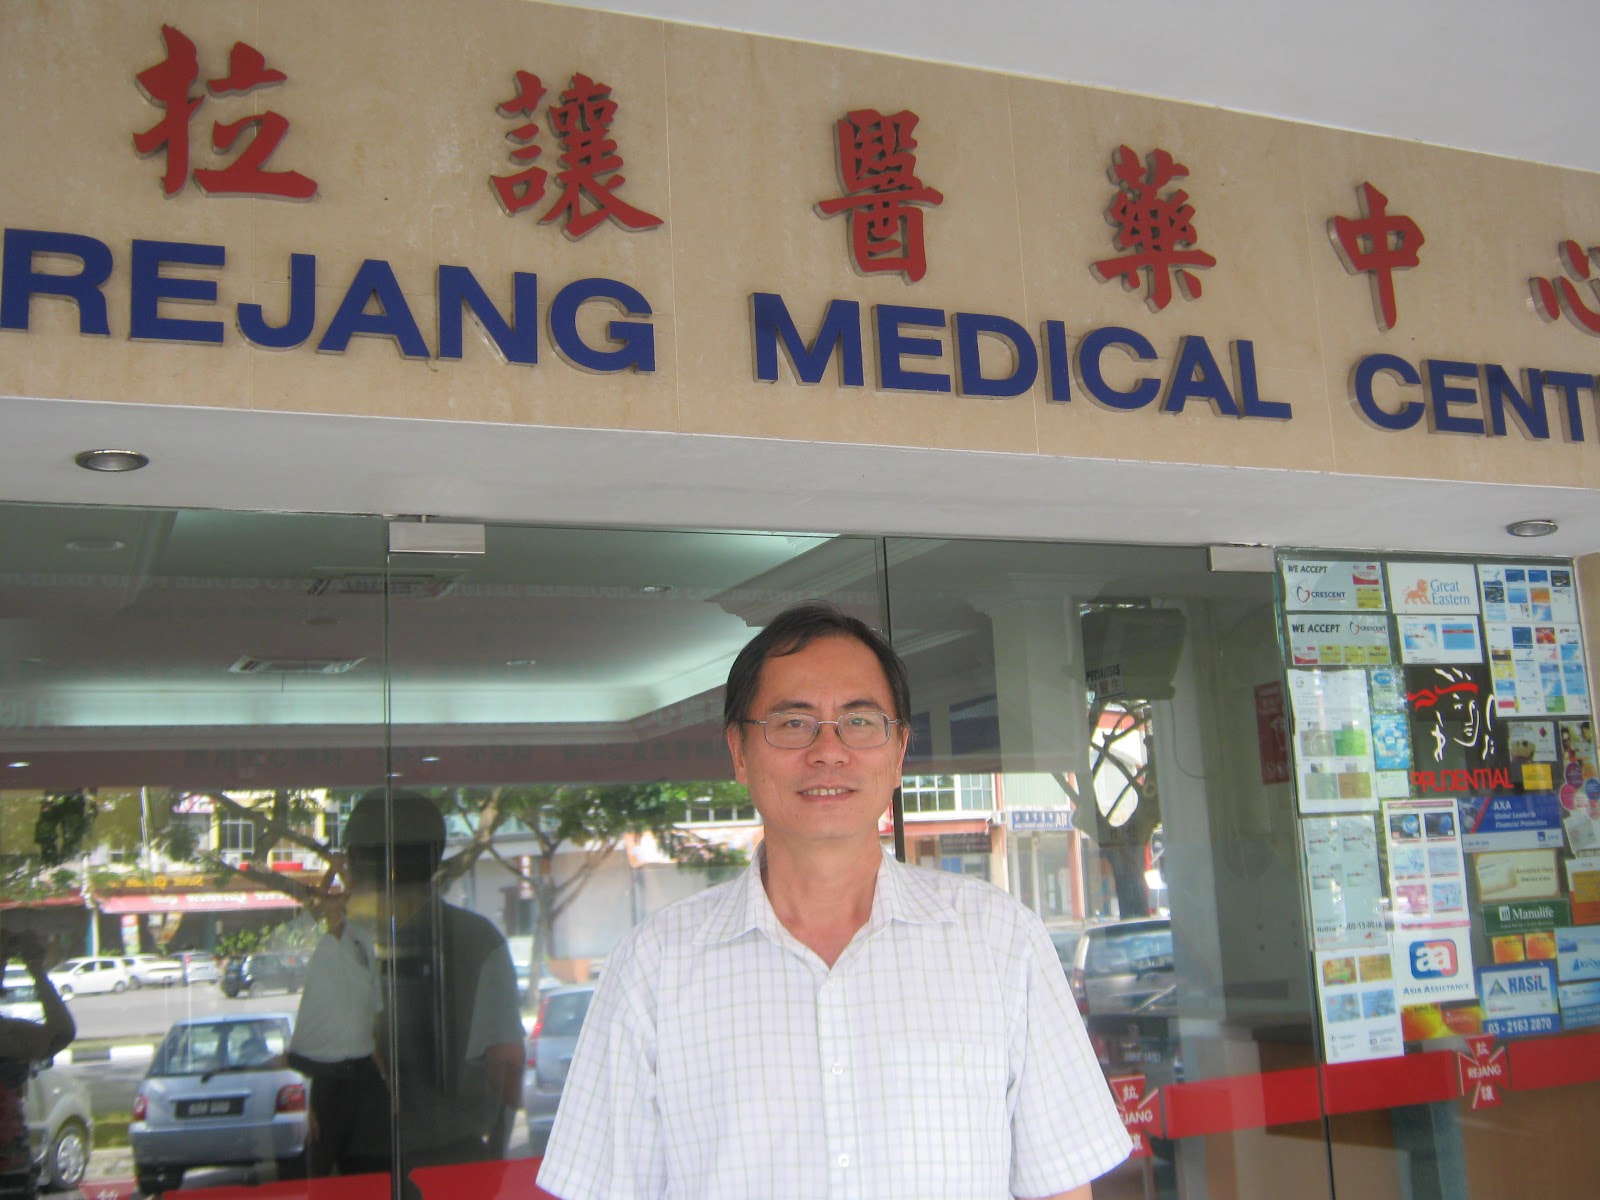 Rejang medical centre